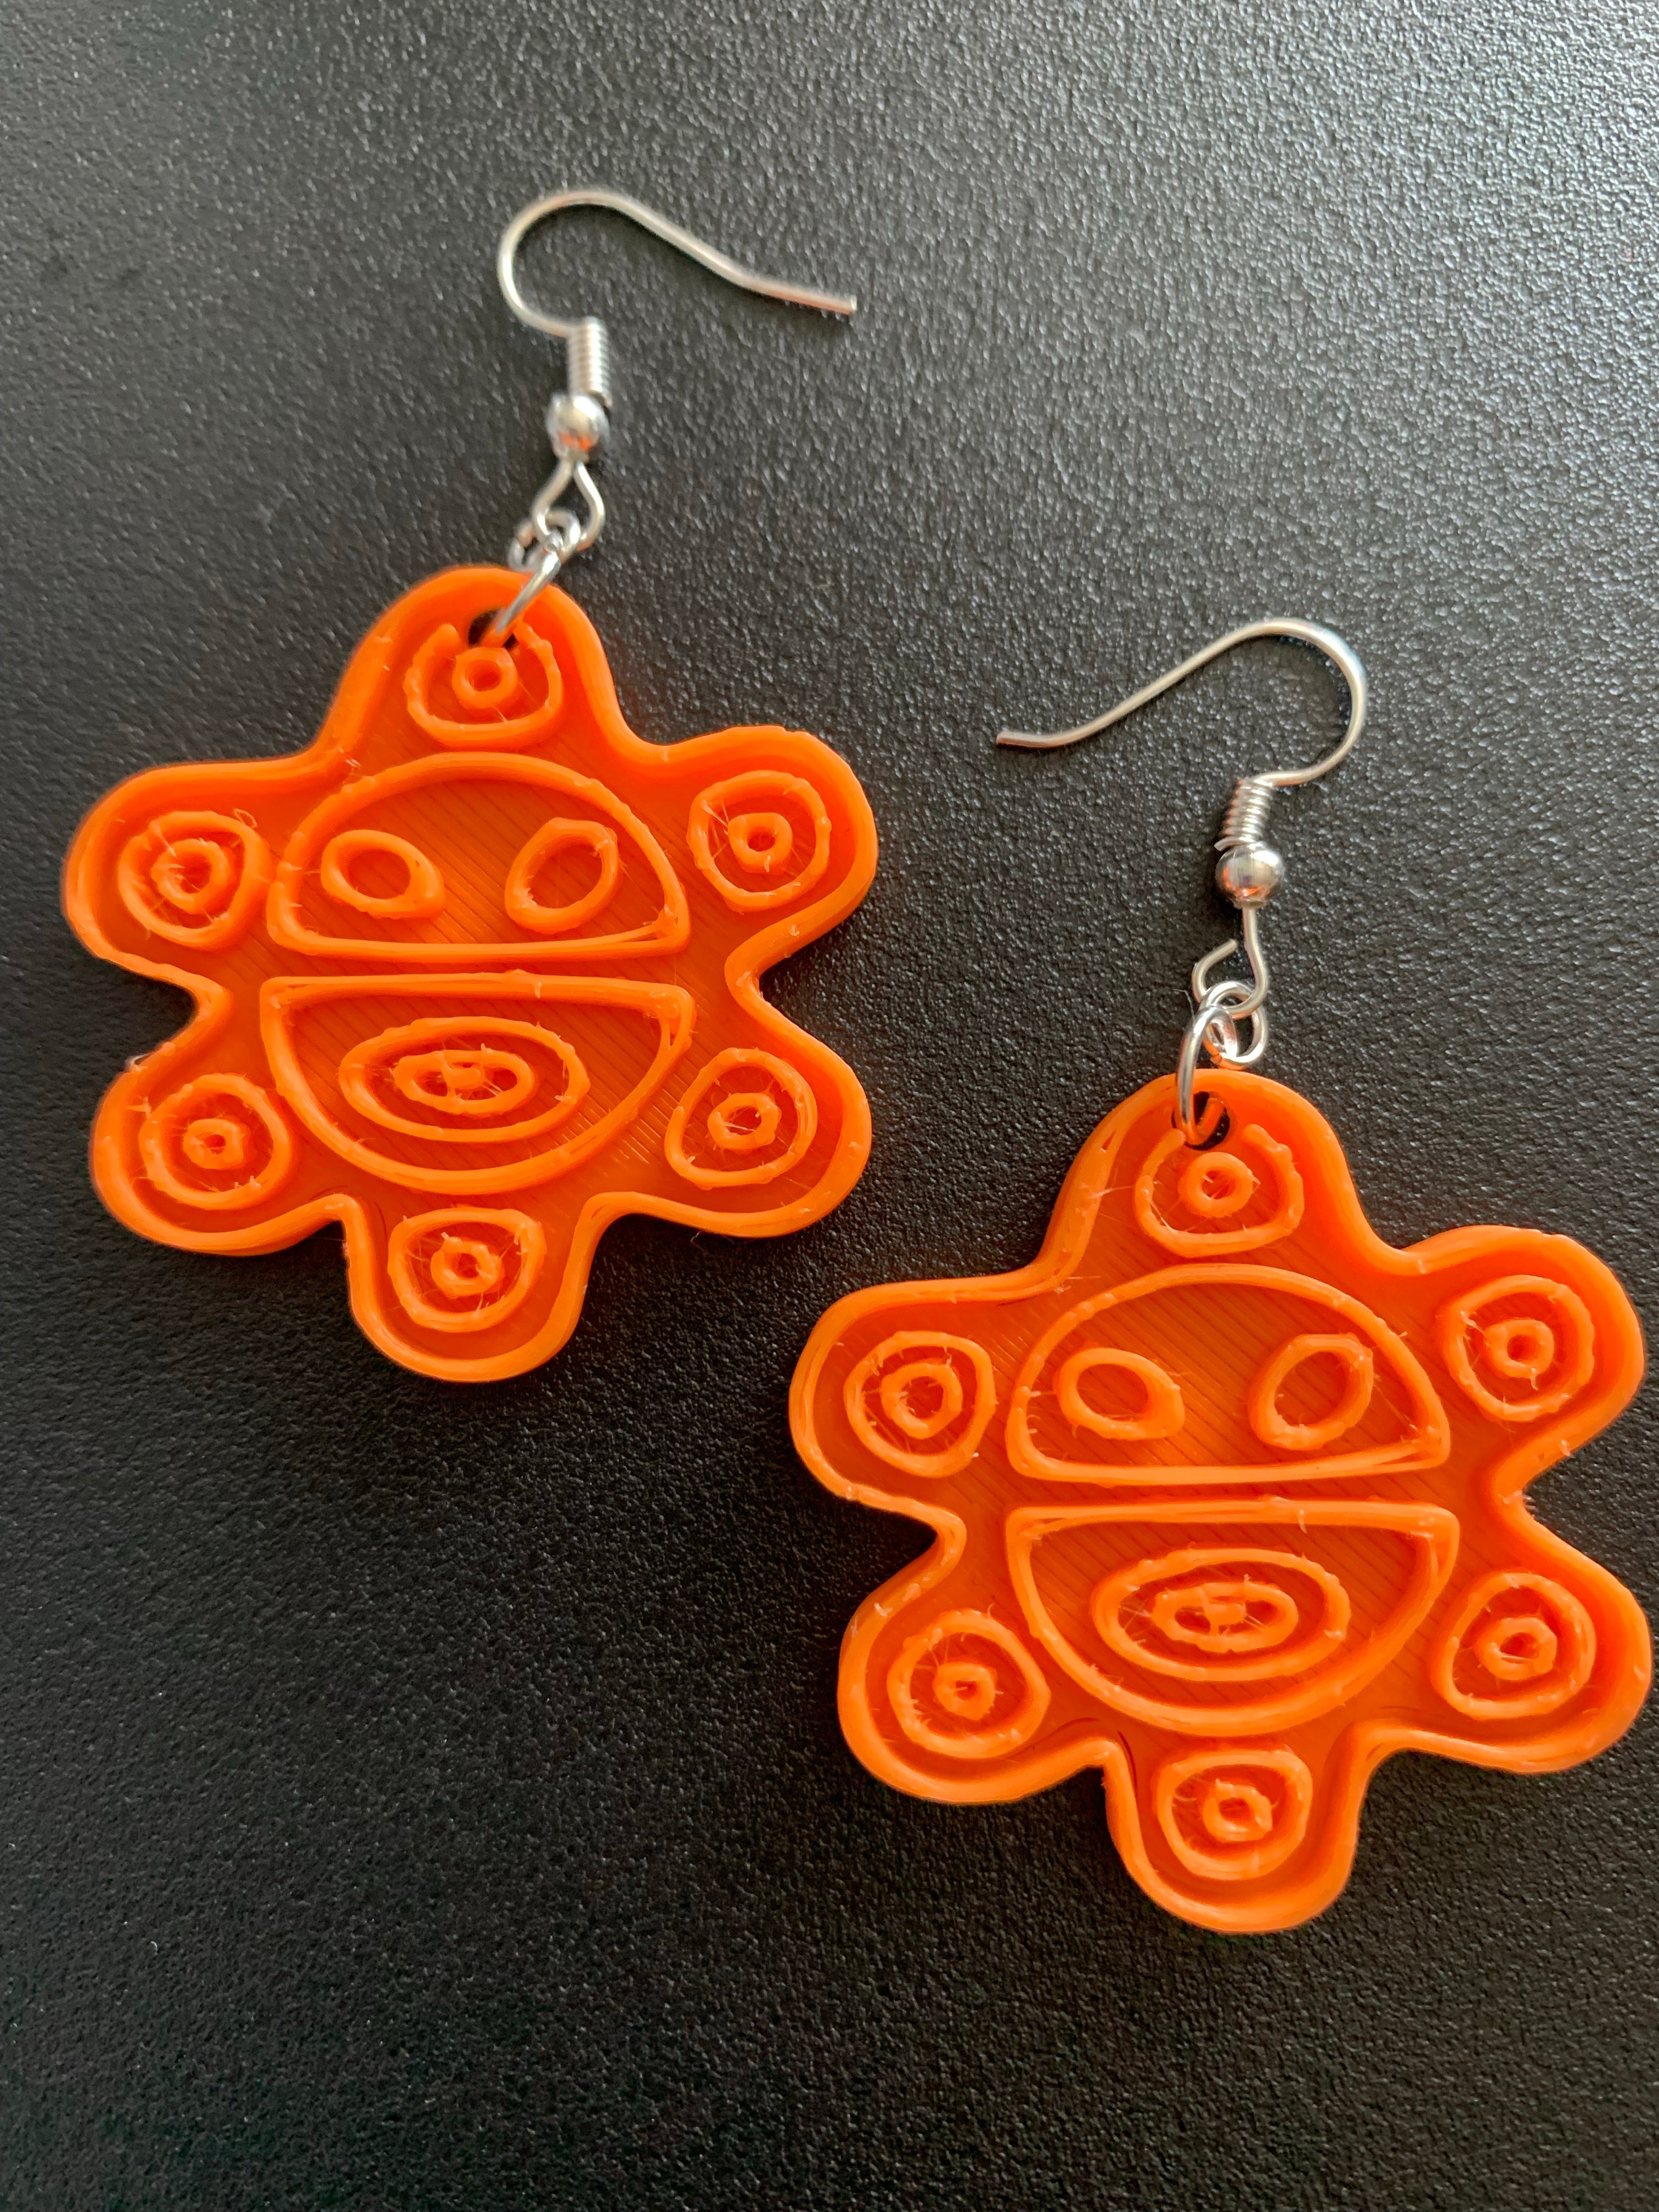 Taino sun earrings